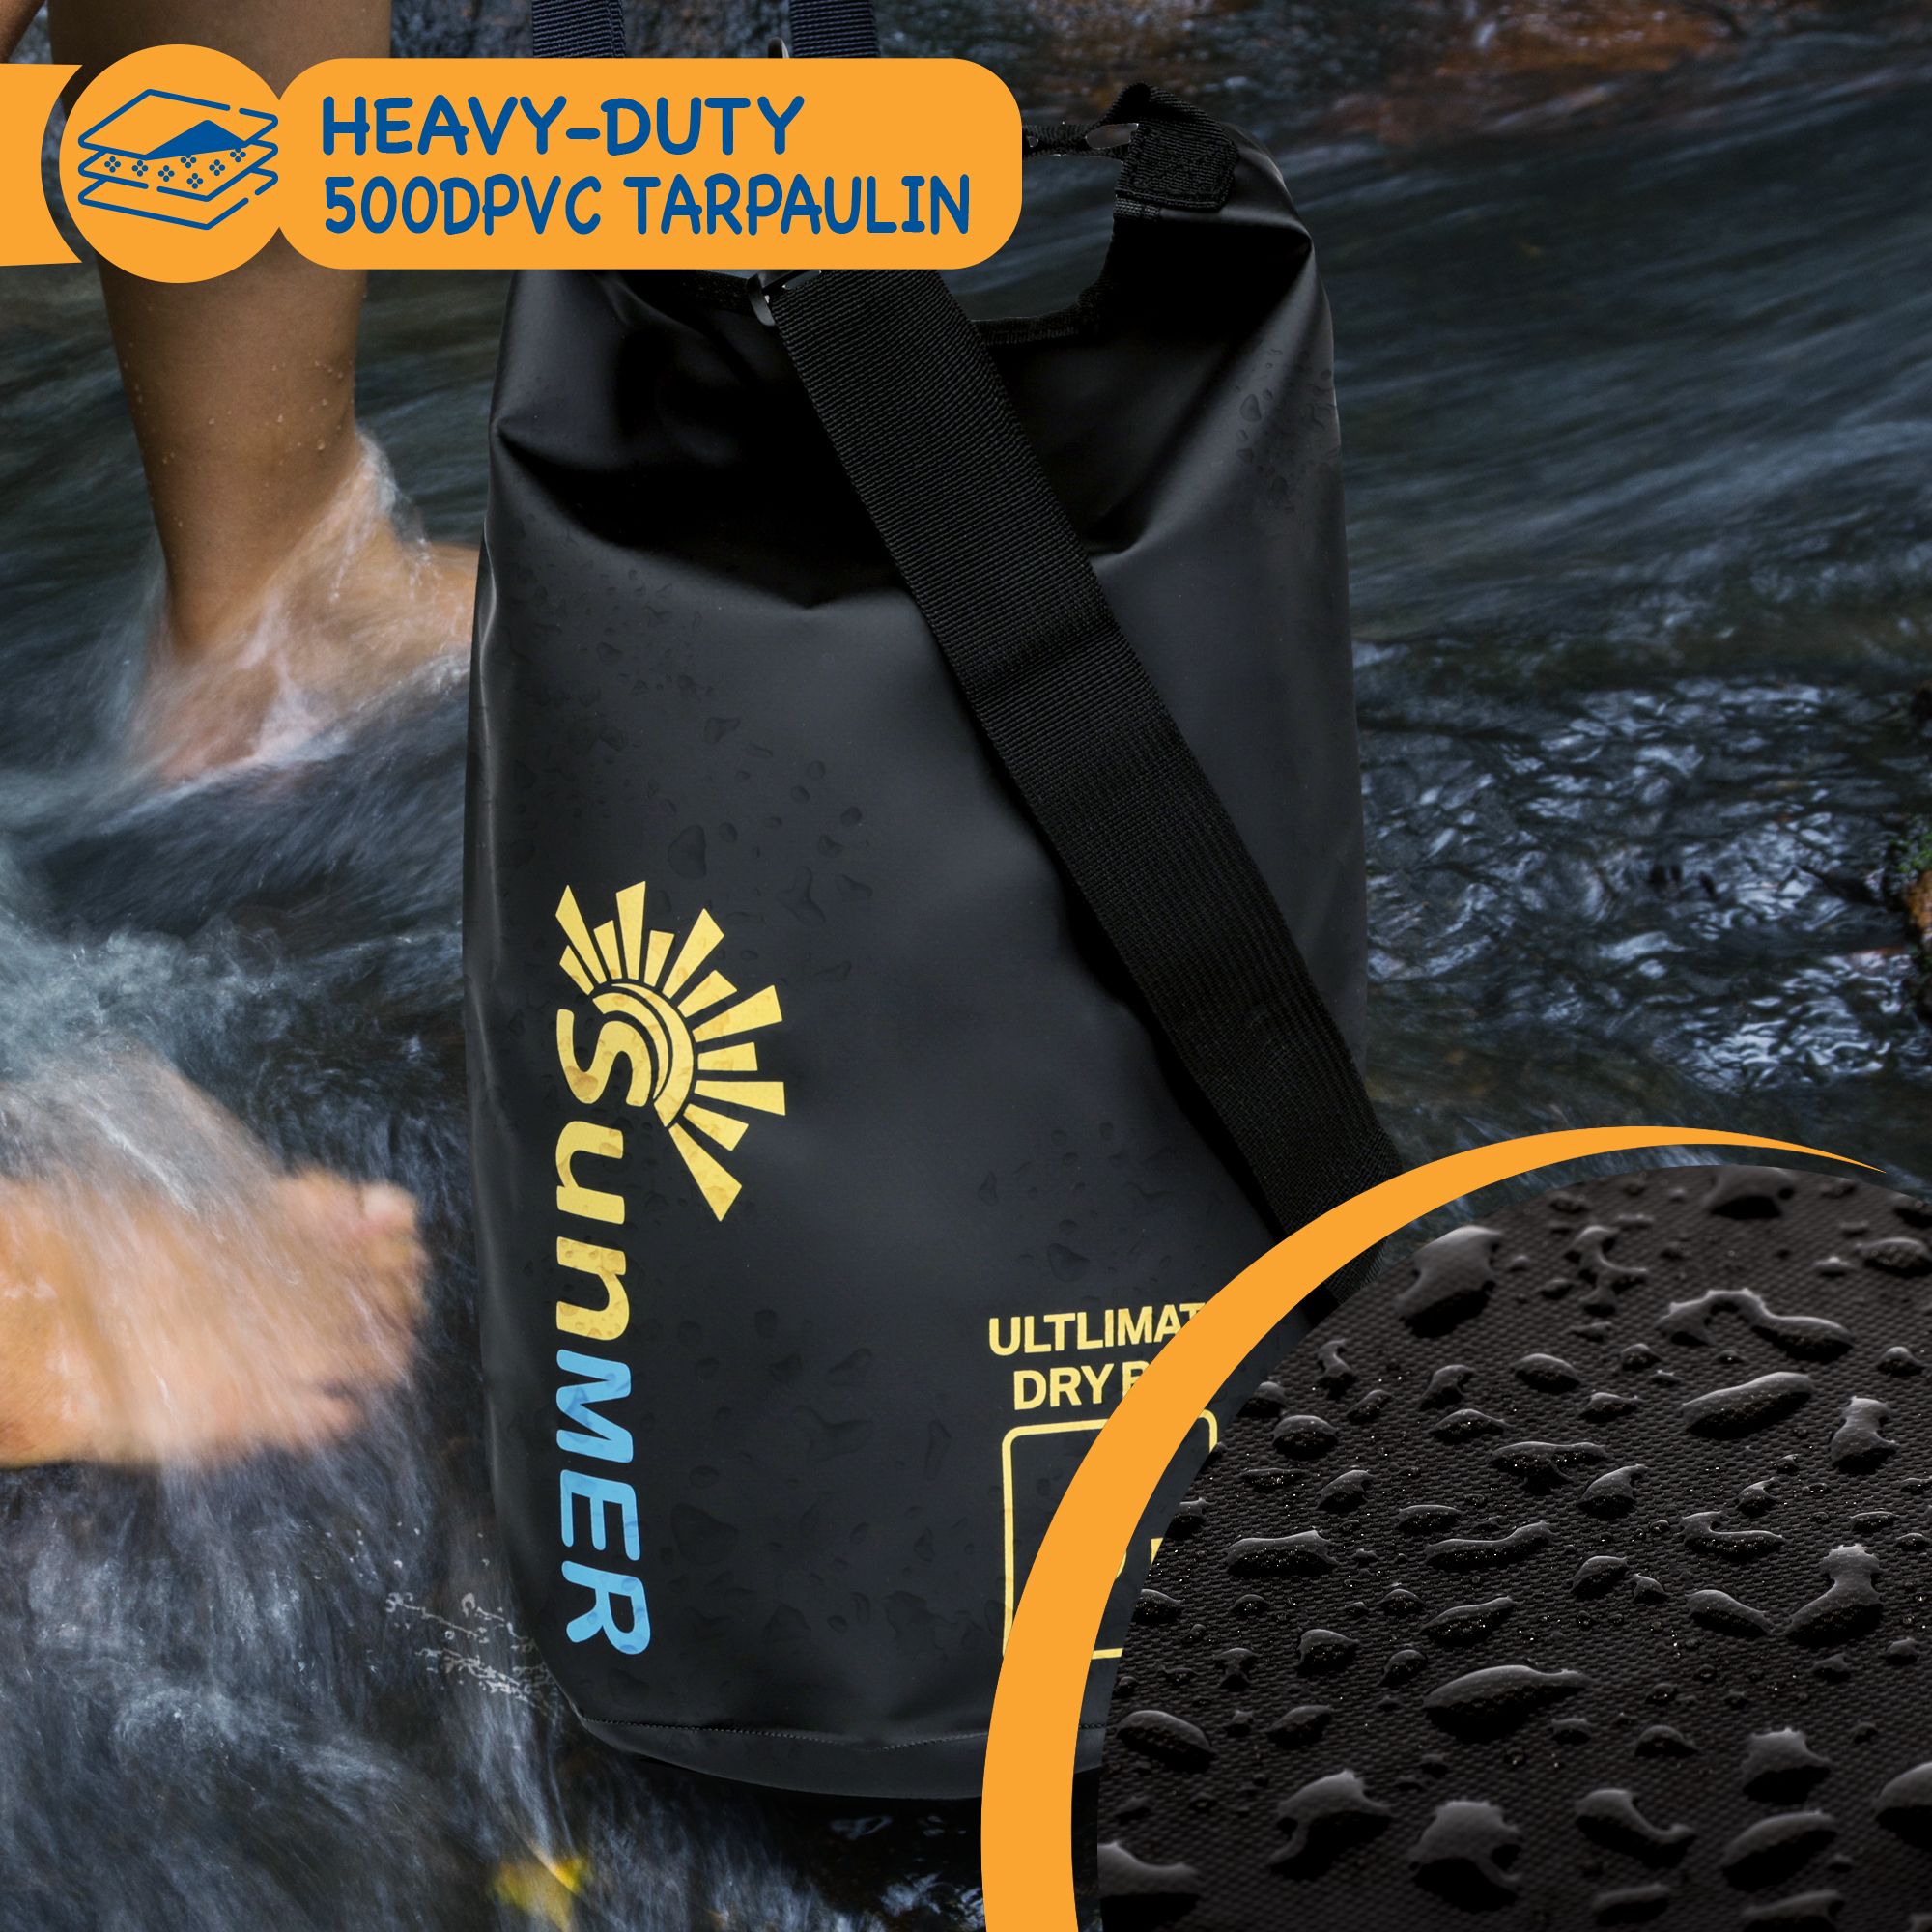 SUNMER 5L Dry Bag With Waterproof Phone Case - Black